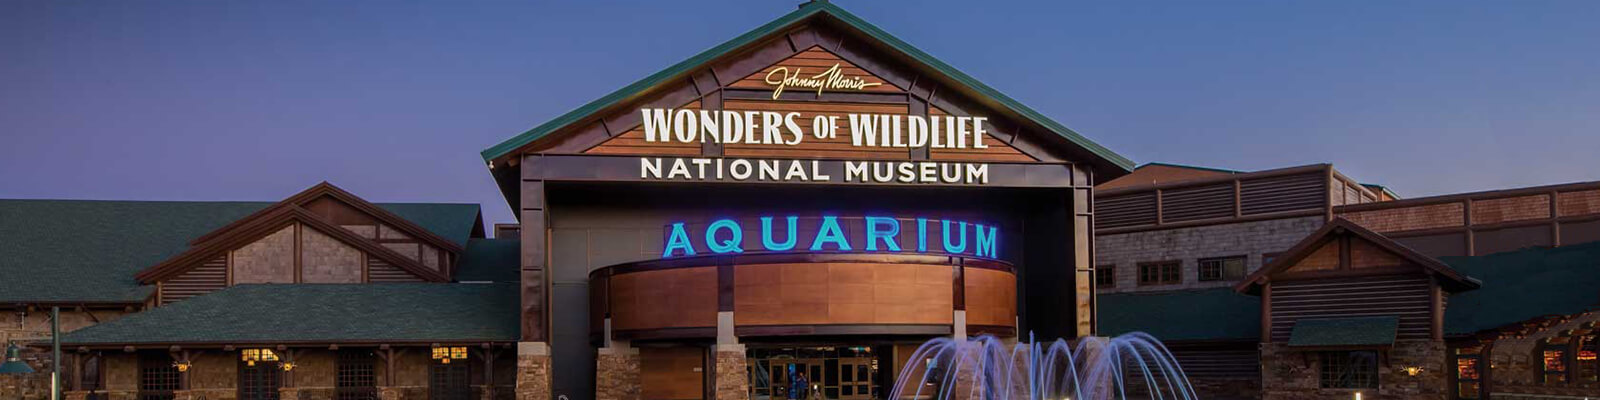 Wonders of Wildlife National Museum Aquarium Coupons